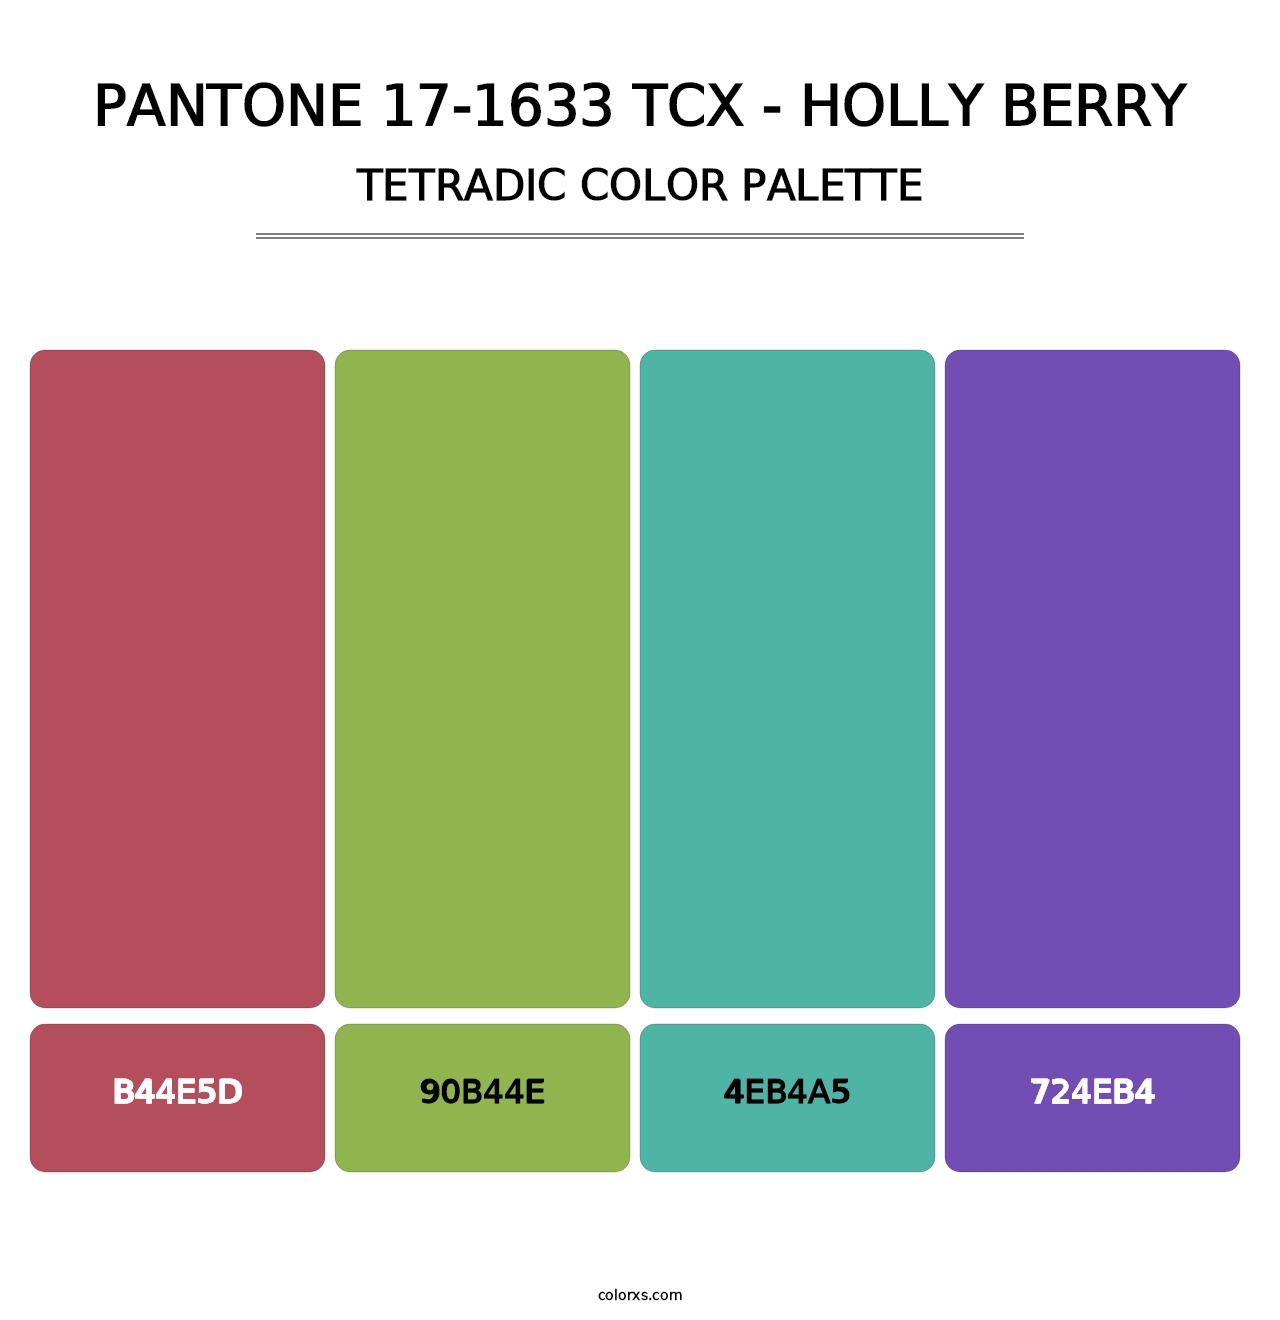 PANTONE 17-1633 TCX - Holly Berry - Tetradic Color Palette